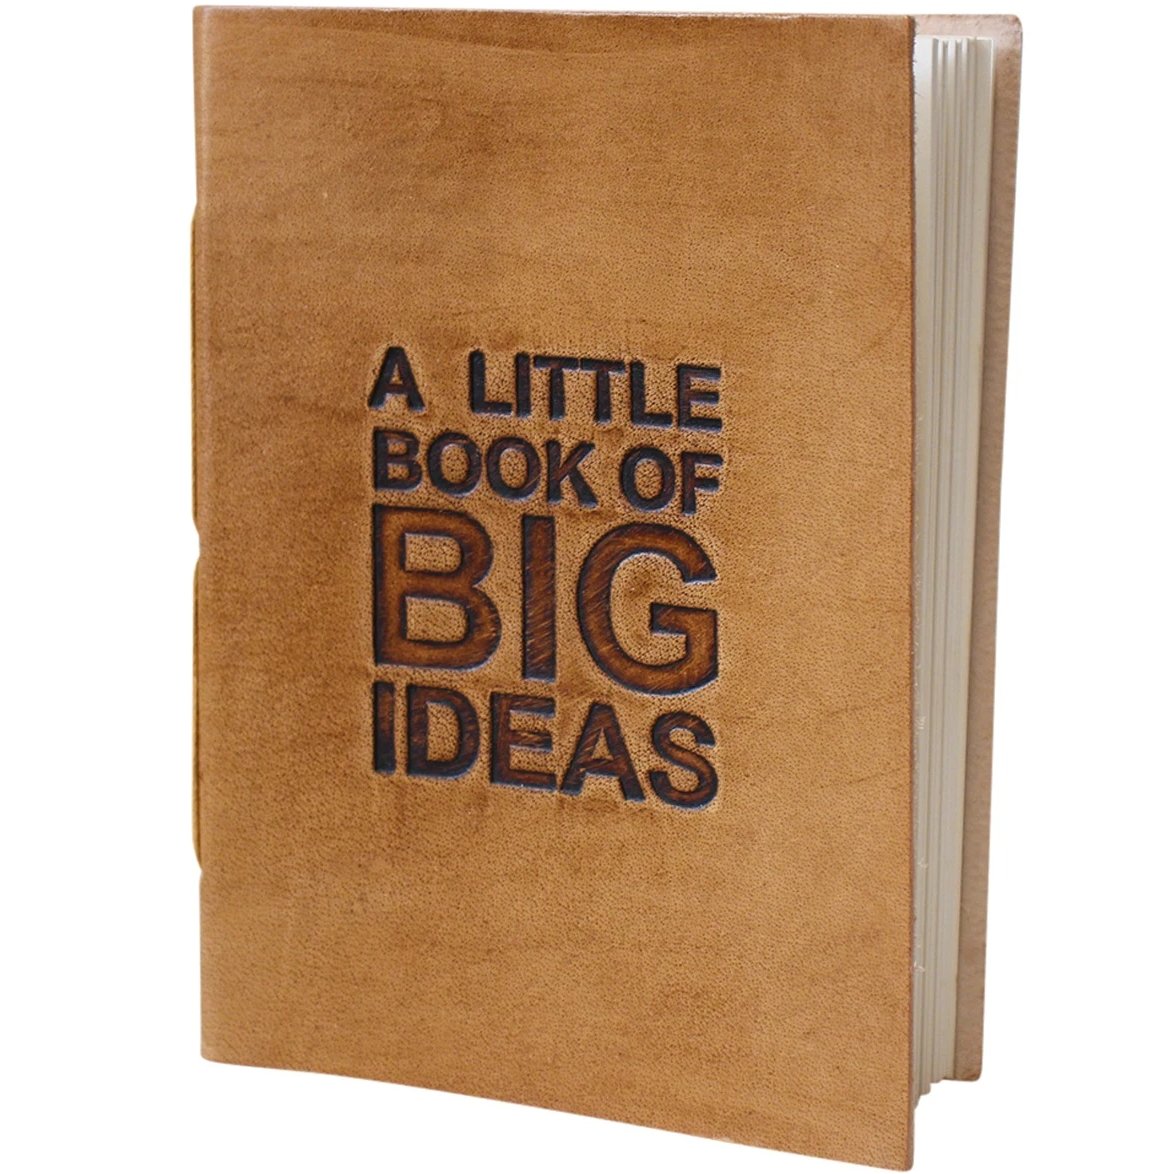 Little book big ideas leather journal / notebook